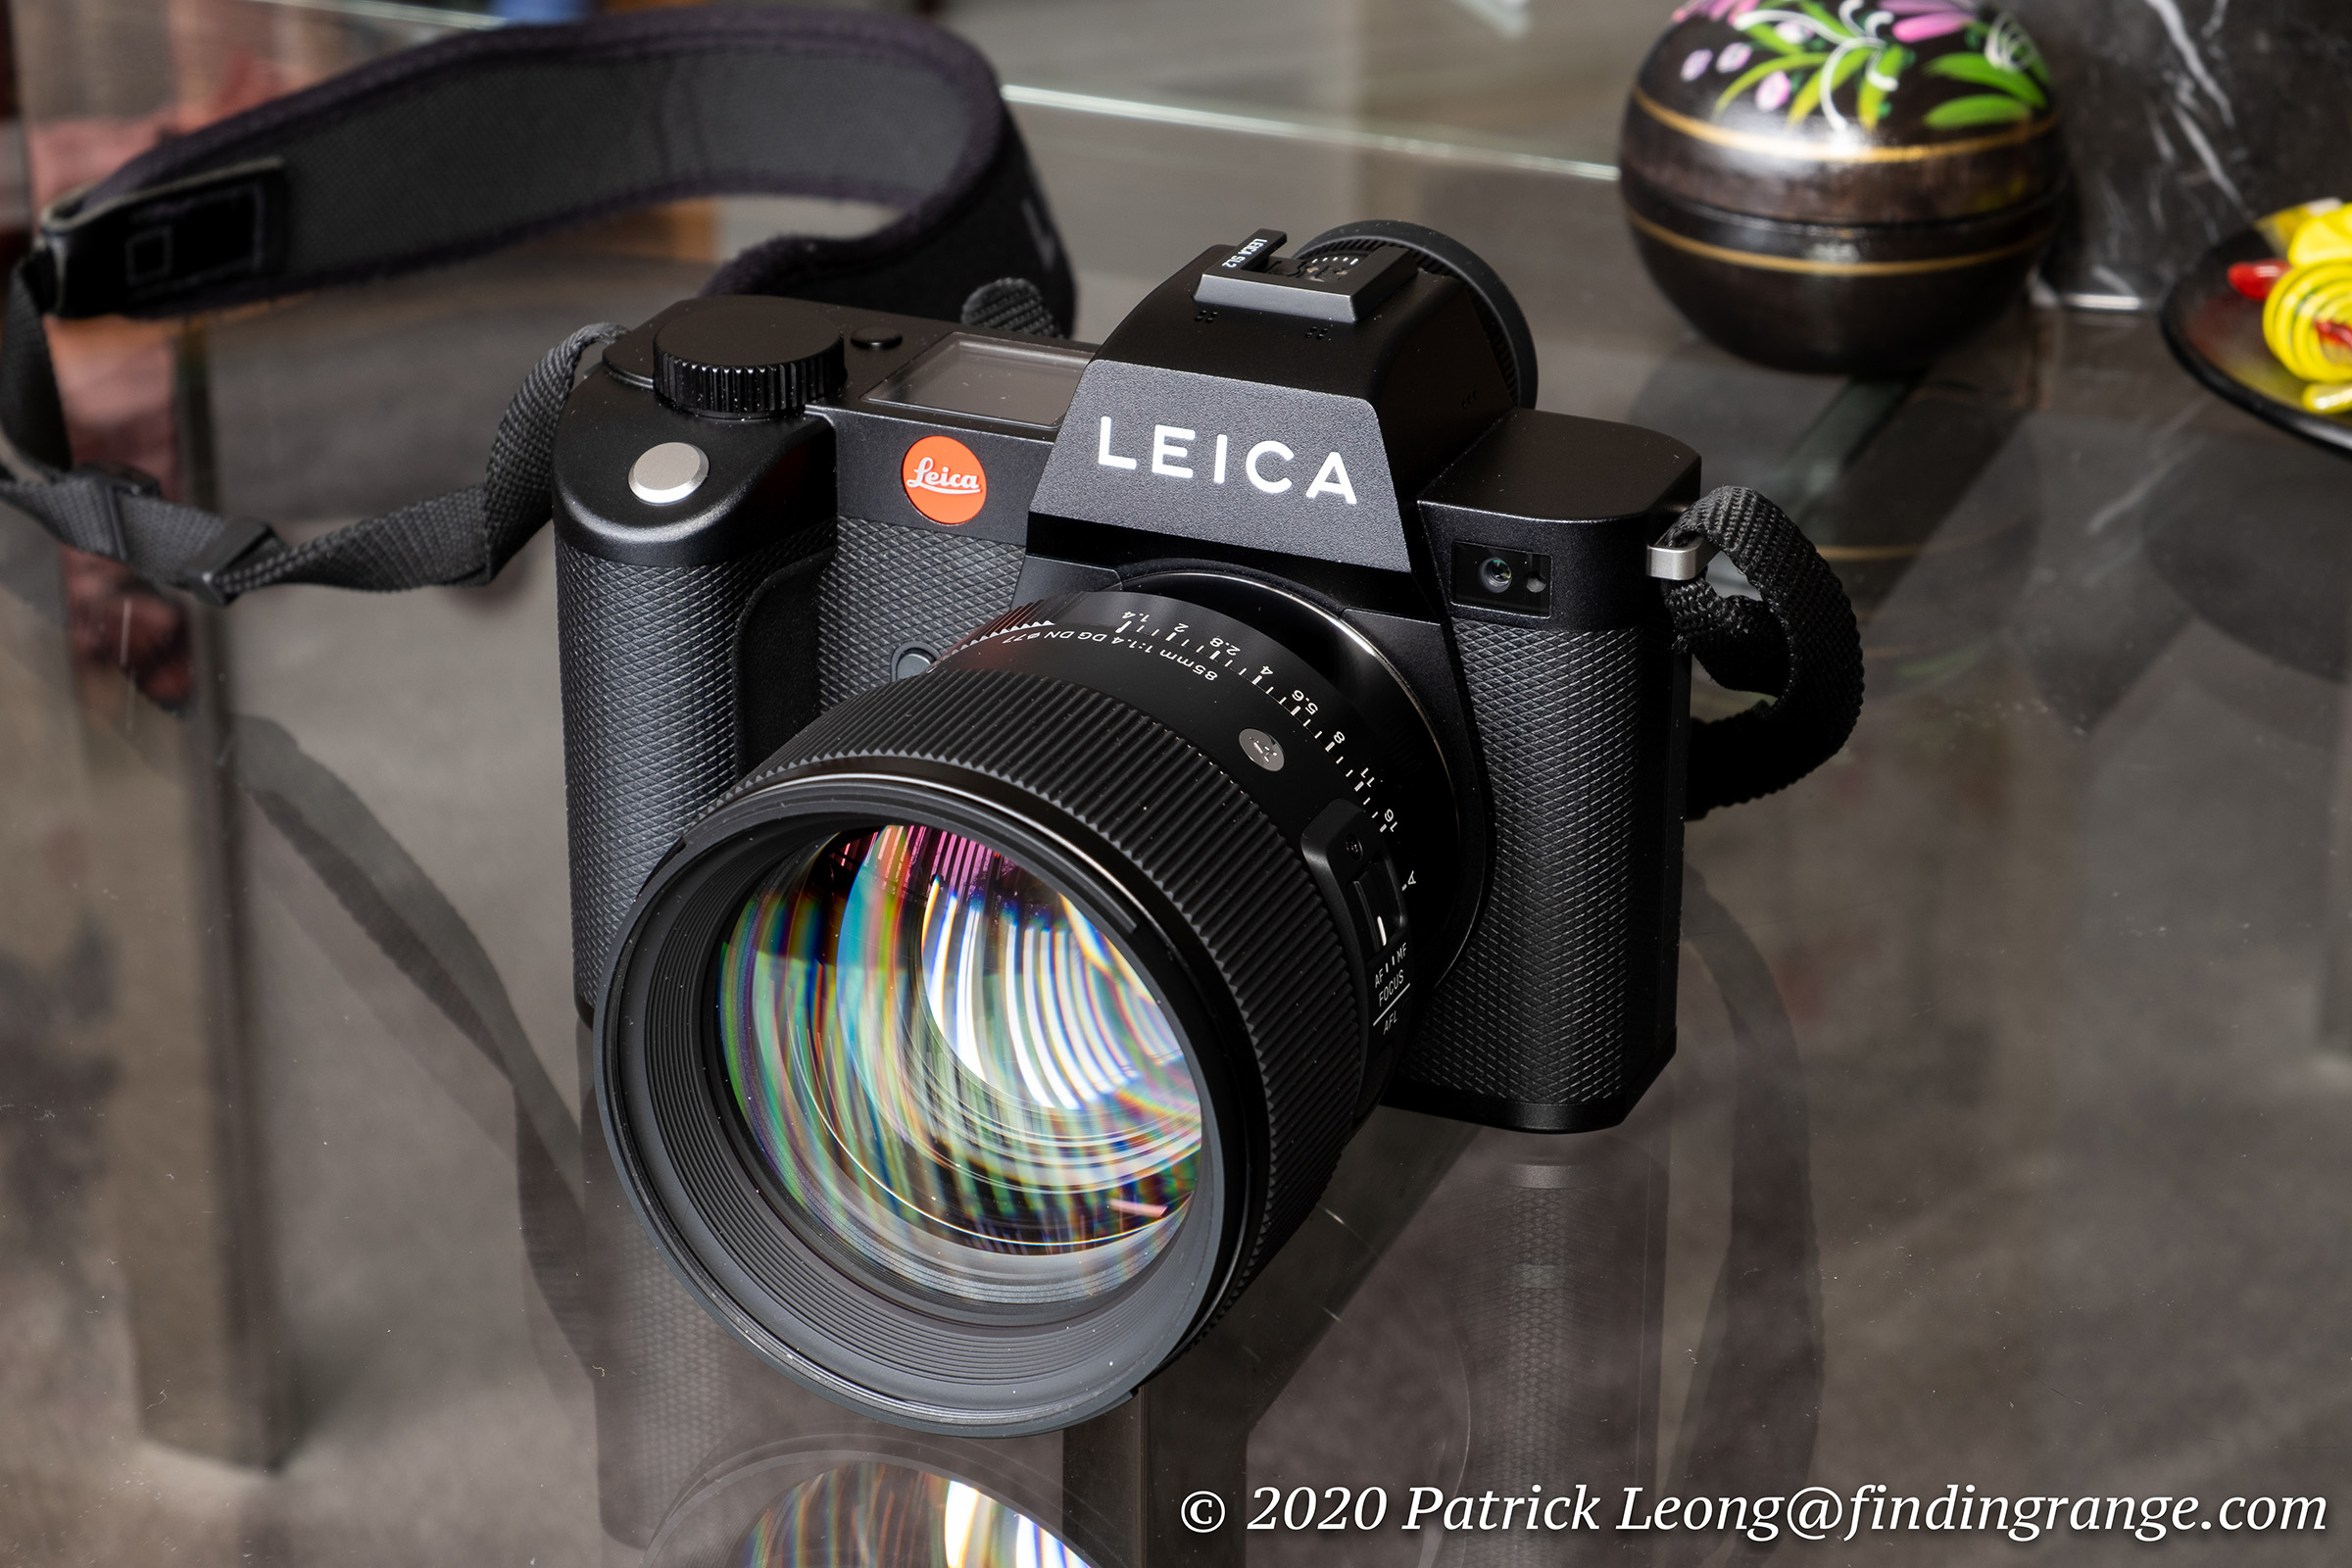 Sigma 85mm f1.4 DG DN Art Lens Review L Mount